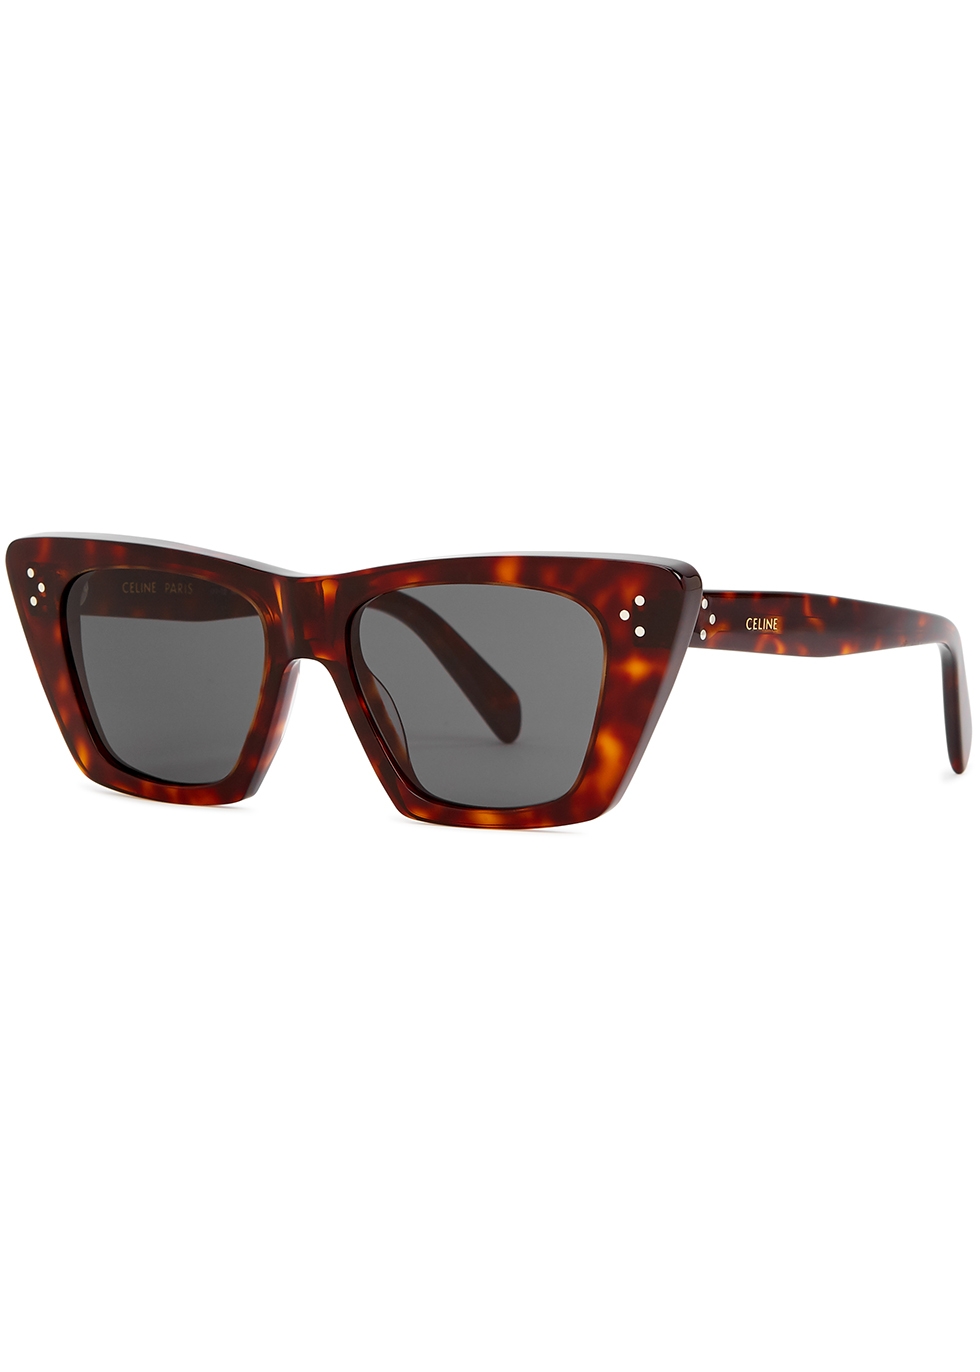 Celine Tortoiseshell cat-eye sunglasses - Harvey Nichols